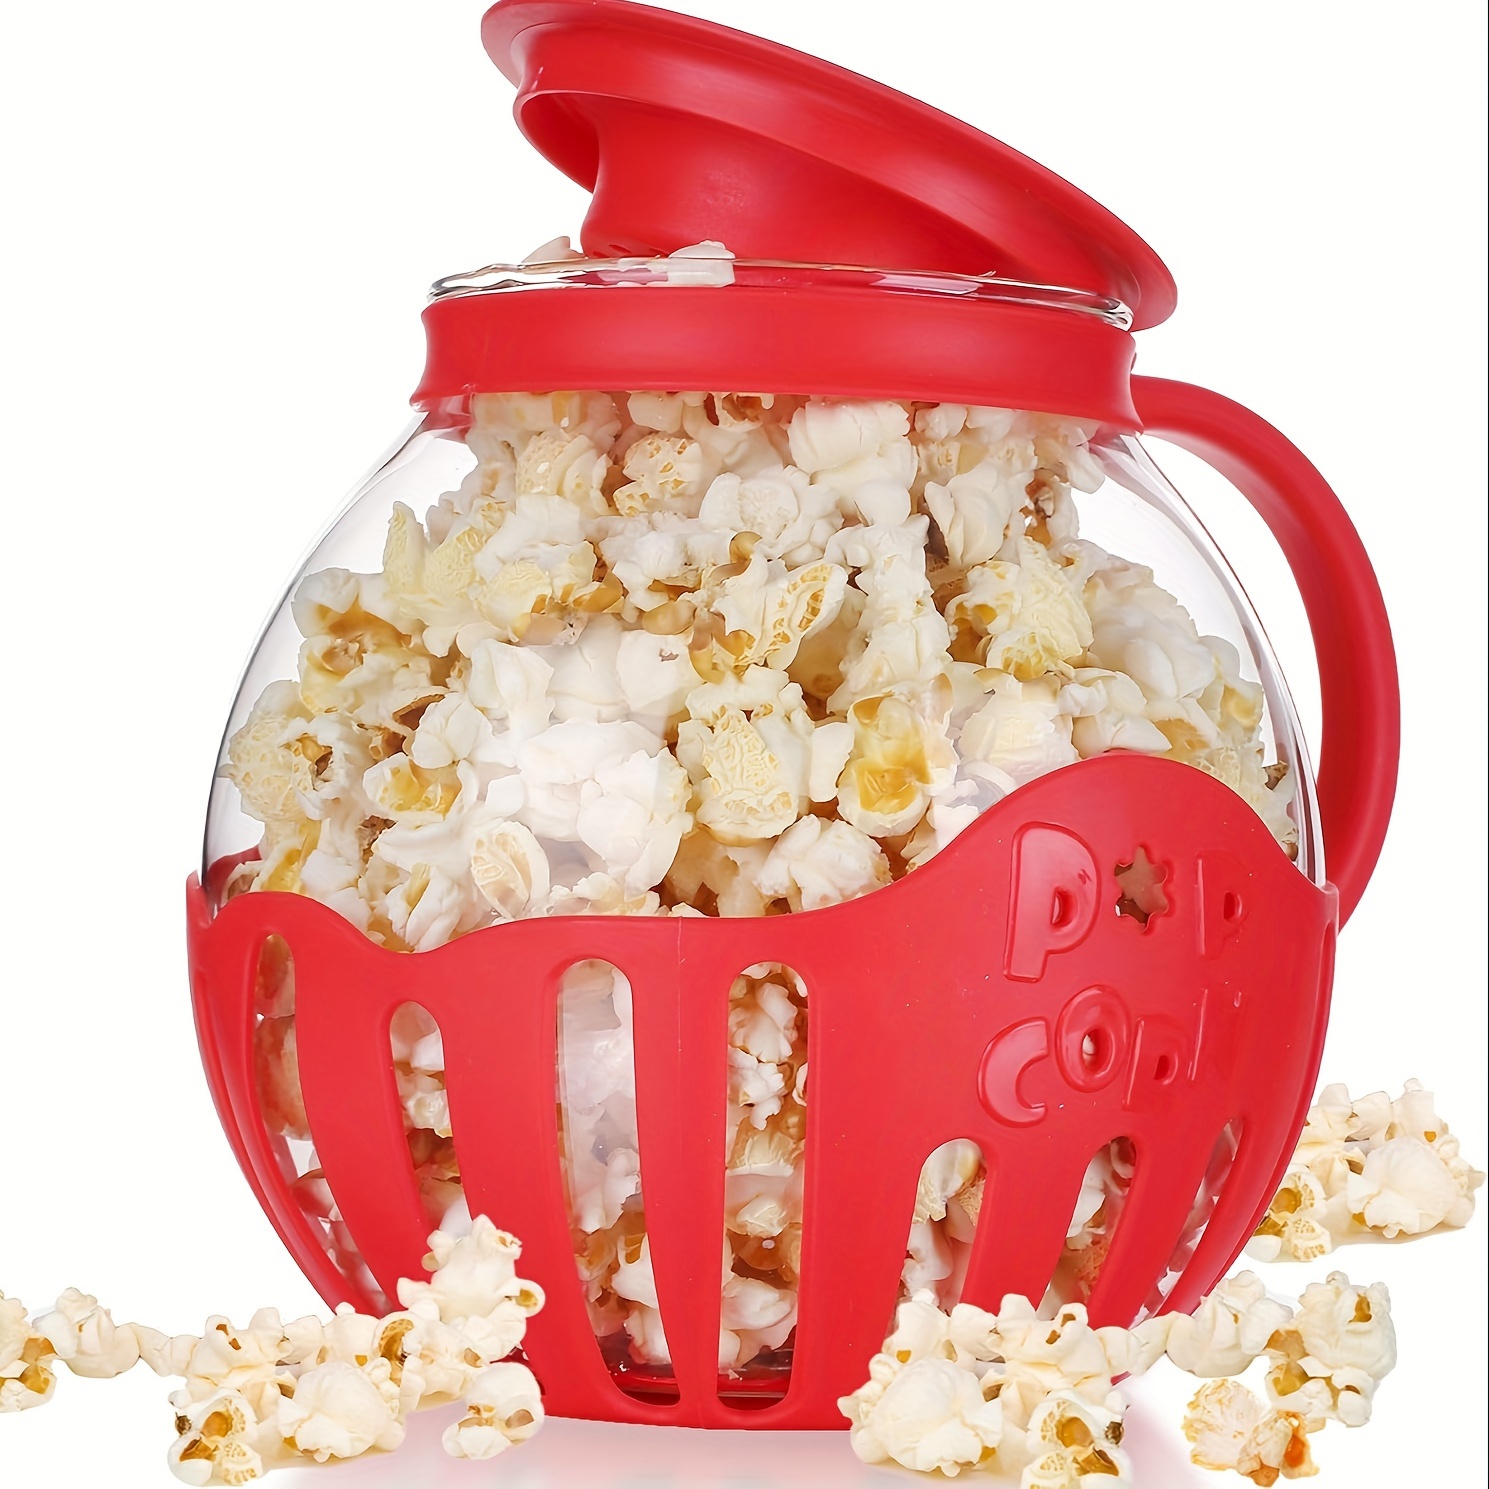 Microwave Micro-Pop Popcorn Popper Bundle Set, 1.5 Quart and 3